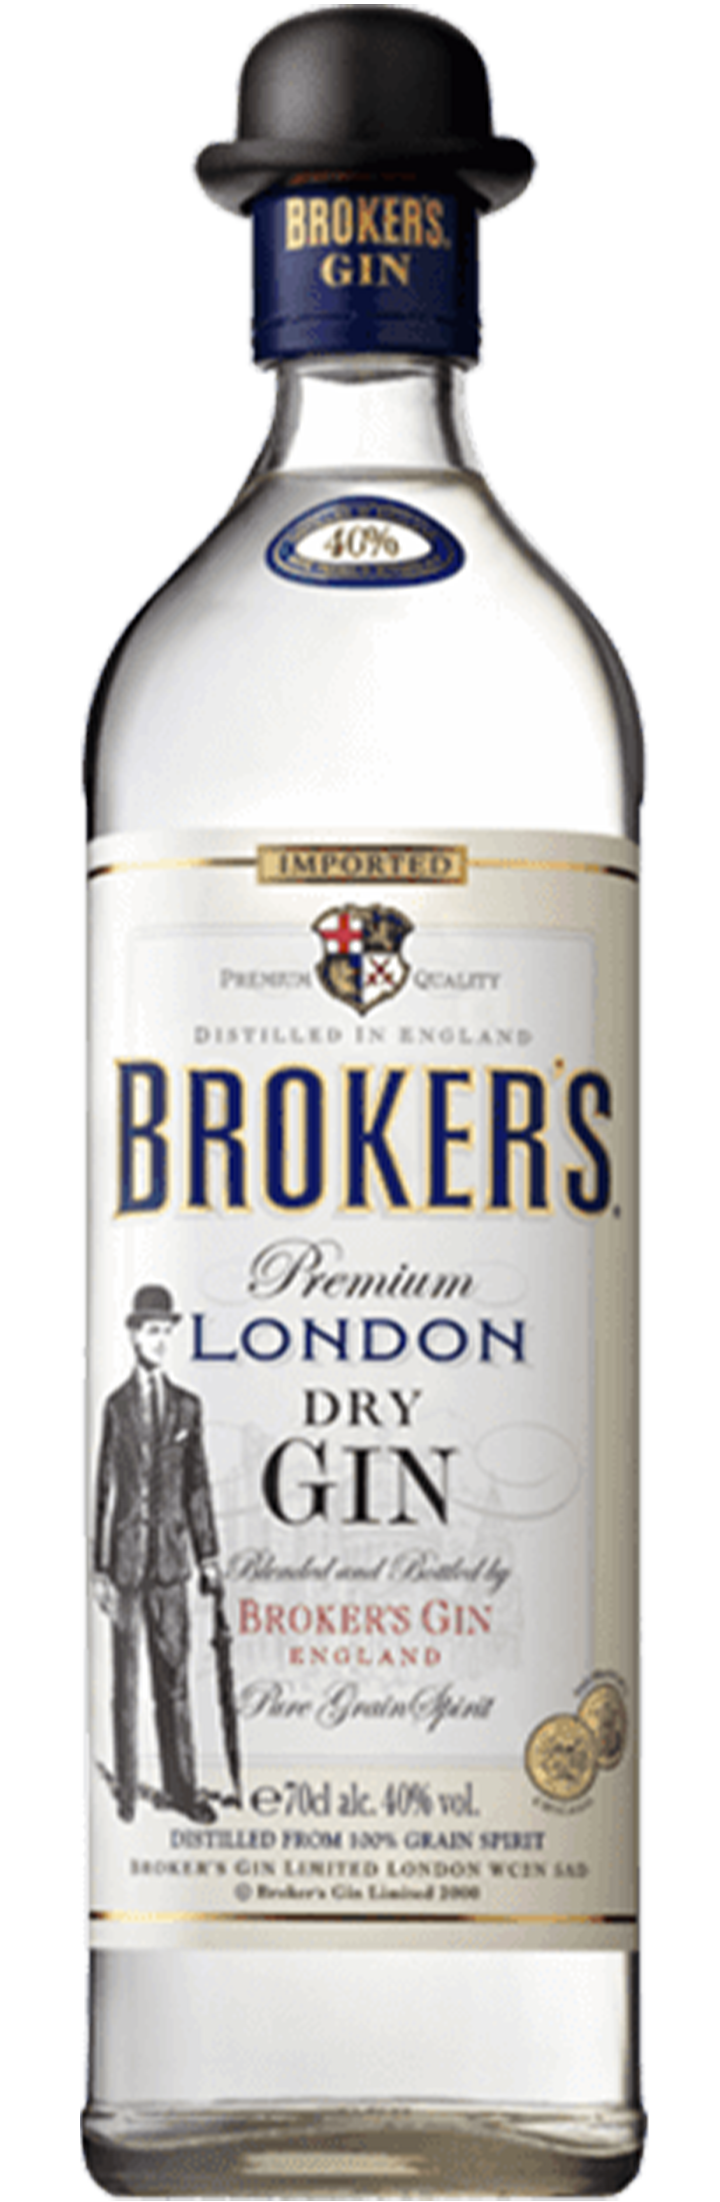 Broker's London Dry Gin 0.7l 